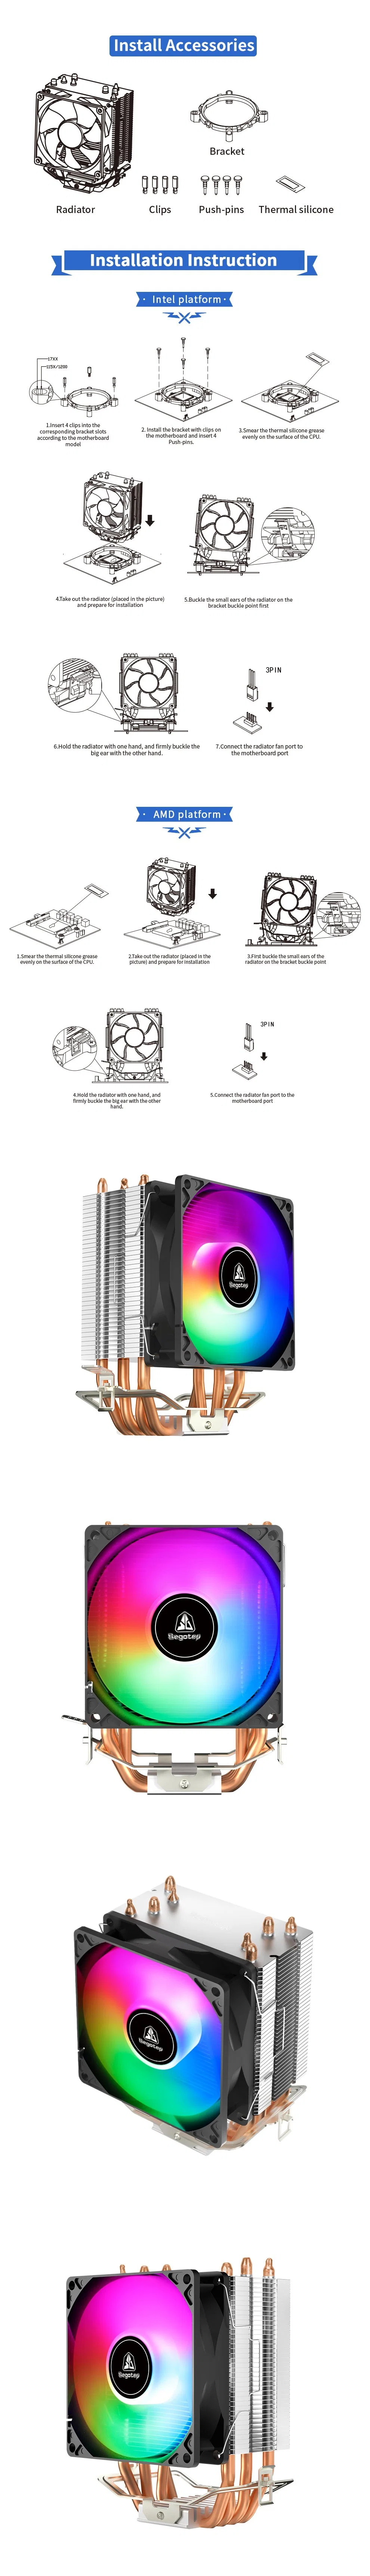 Segotep Frozen Tower Ts4-M Multiple Platform AMD Intel Gaming Computer Air Cooling Radiator PC Cooling Fan Low Profile 9cm Fan